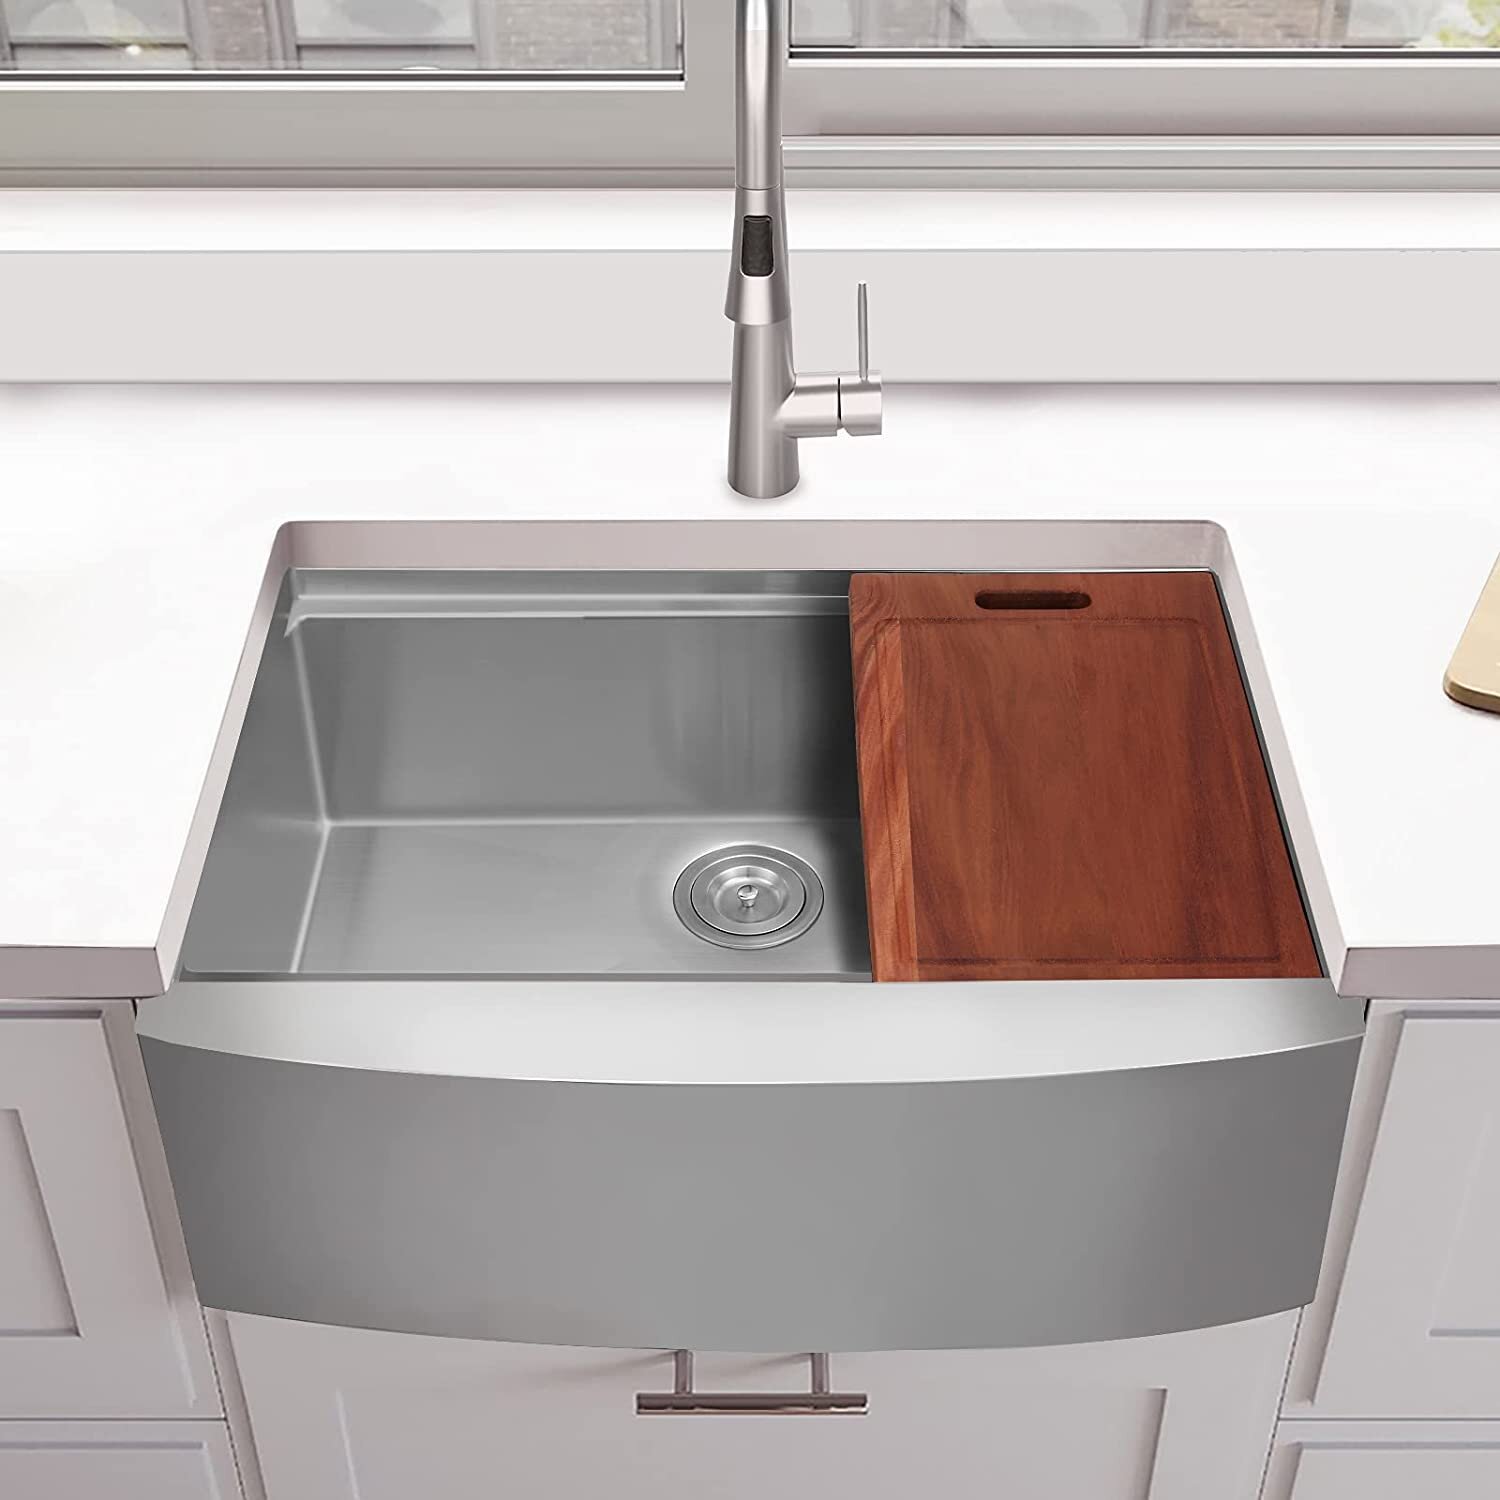 ALWEN 30 x 22 inch Farmhouse Kitchen Sink, Workstation Ledge 18 Gauge  Stainless Steel Sink Modern Apron-front Single Bowl Kitchen Sink Wayfair